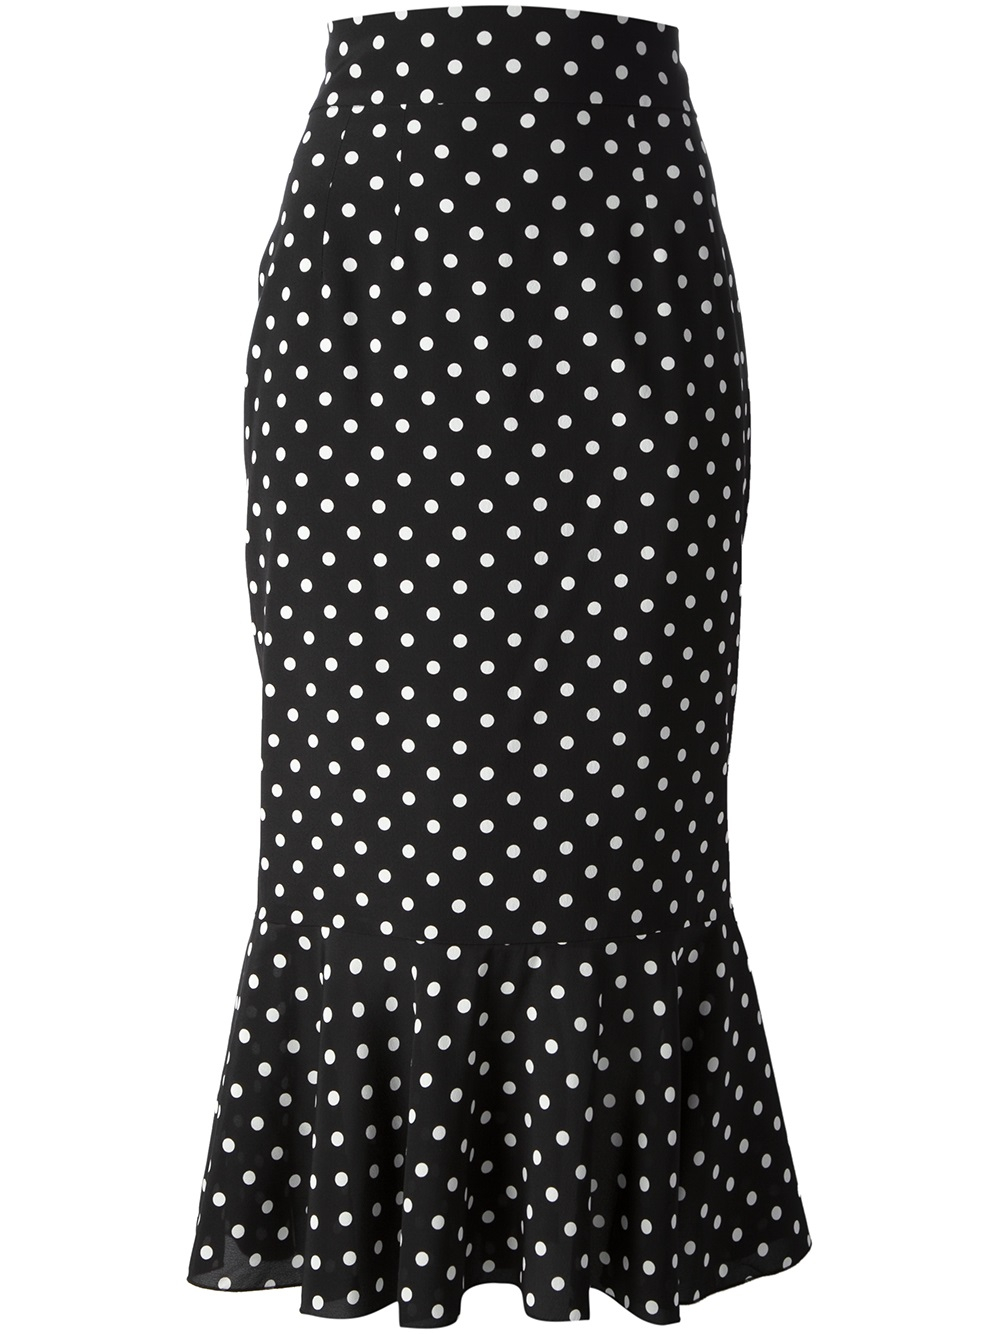 Lyst - Dolce & Gabbana Polka Dot Drill Dress in Black